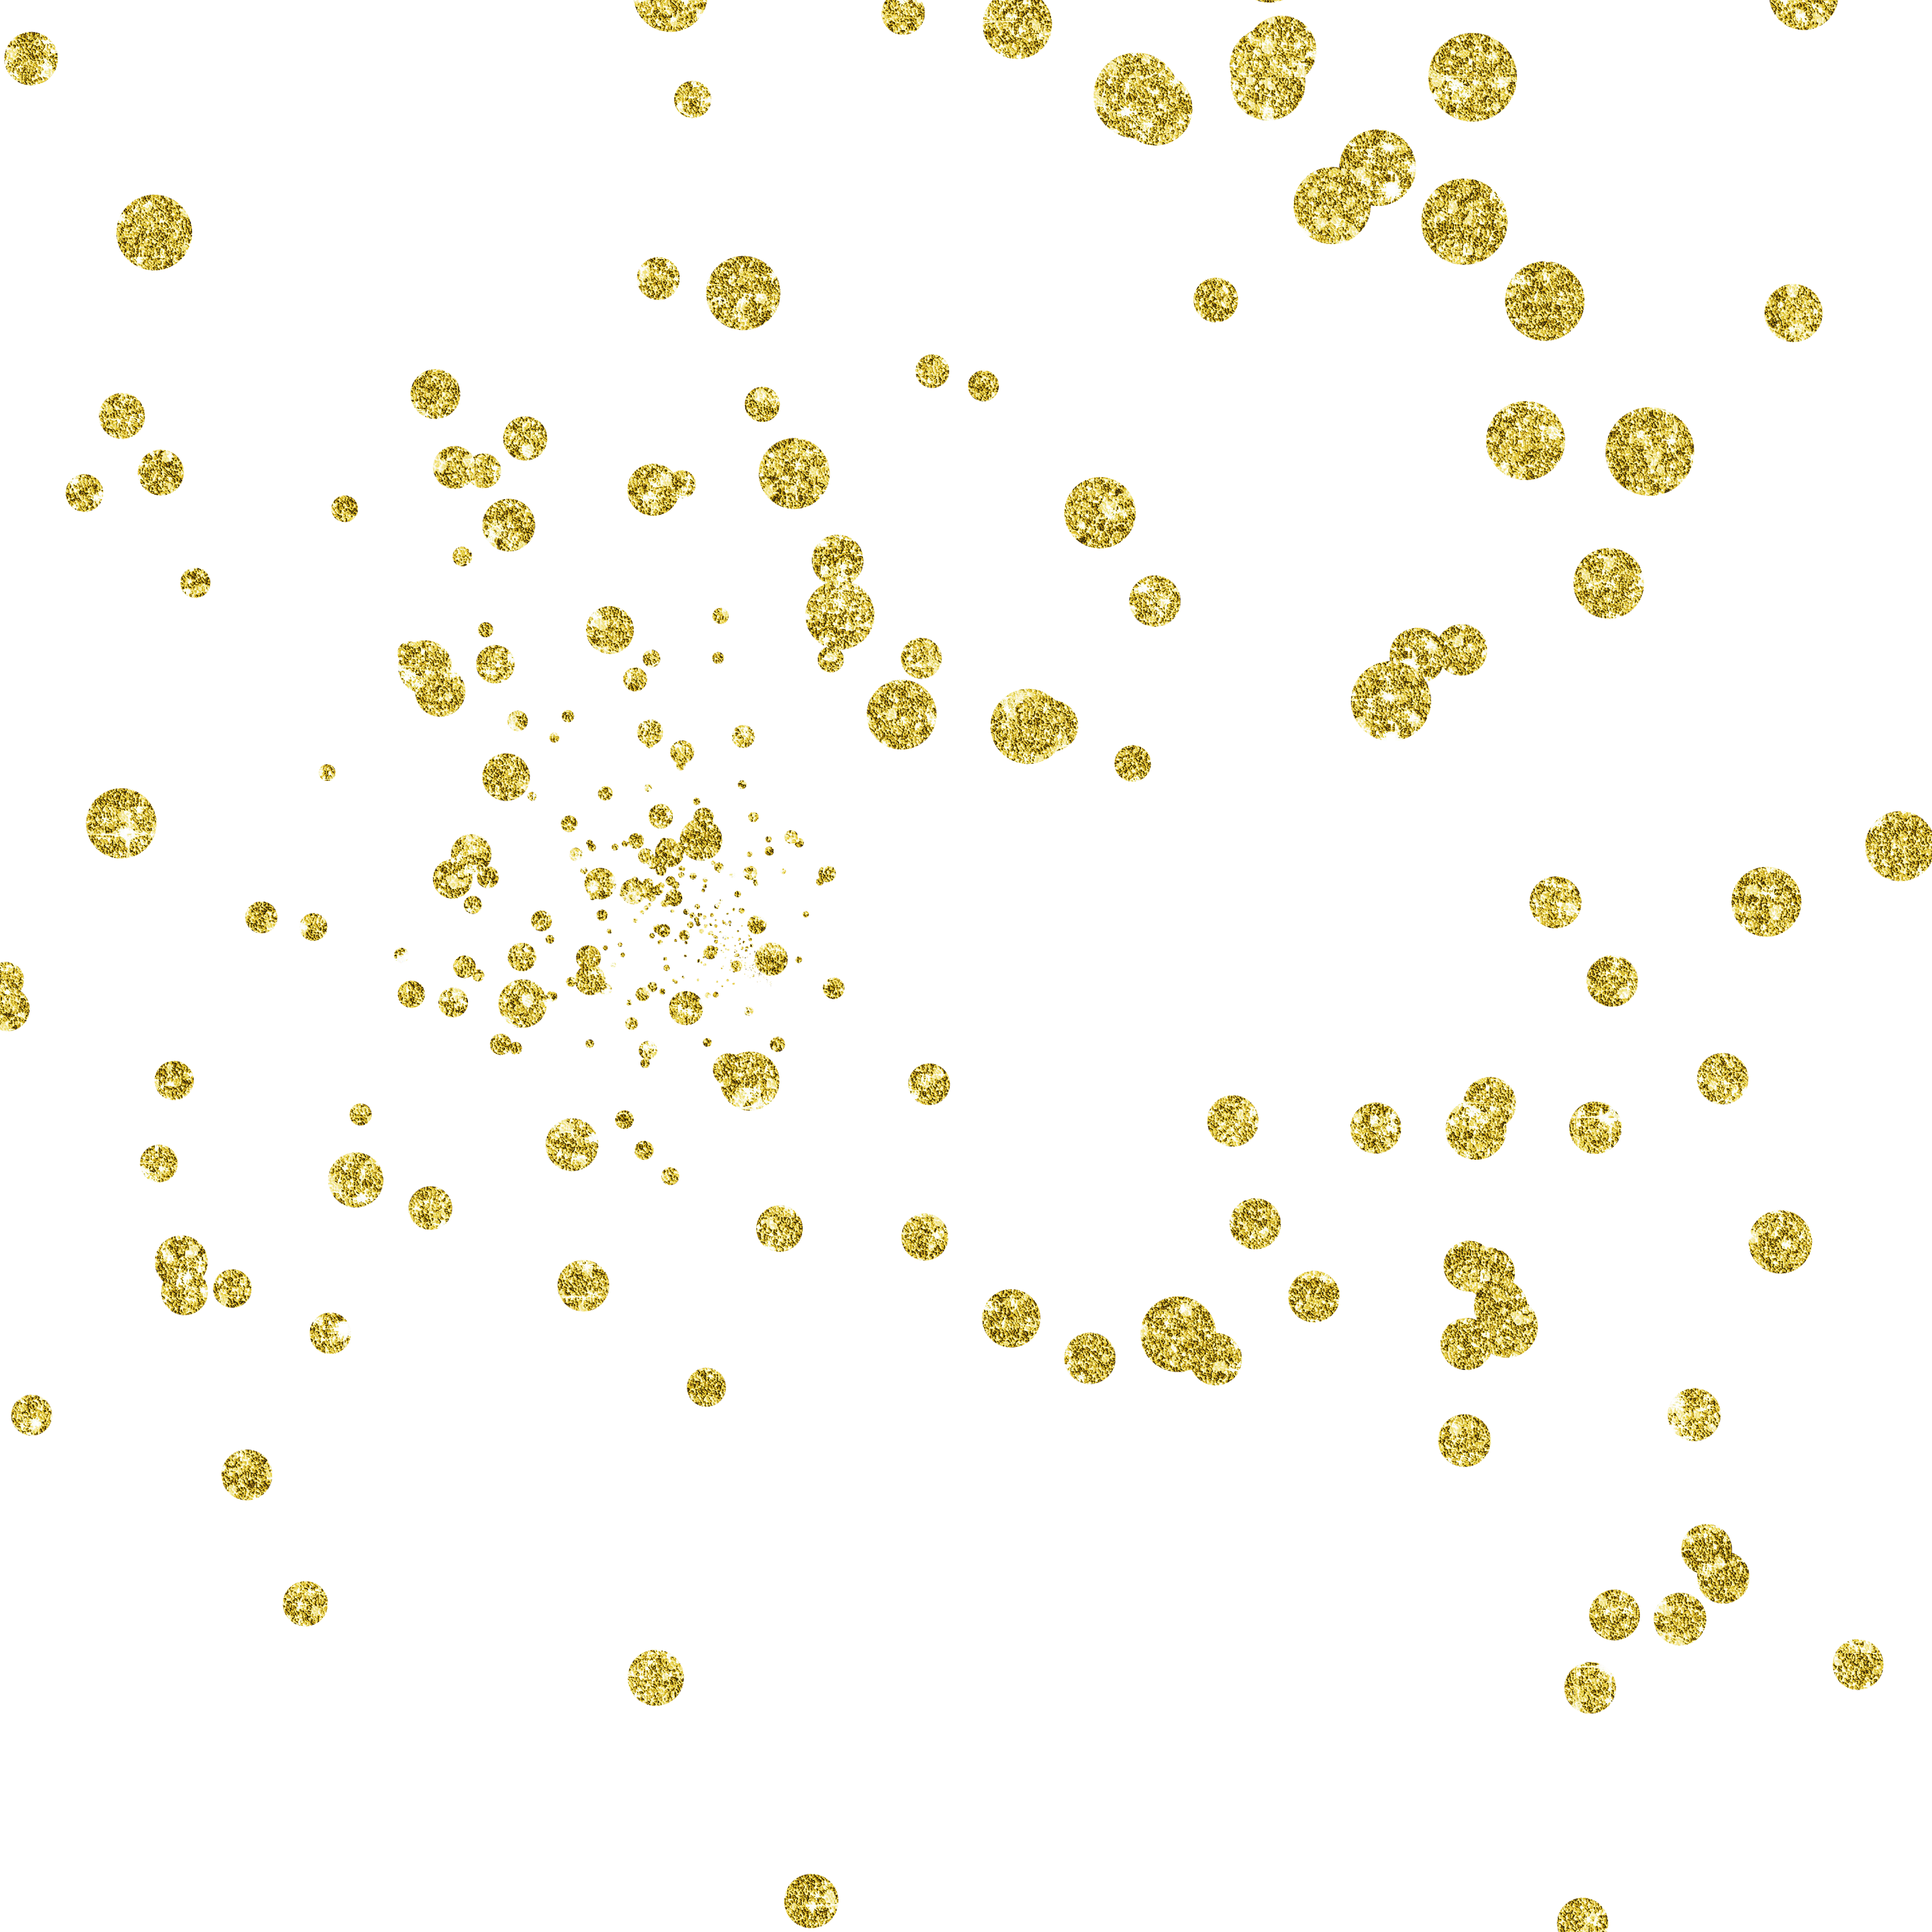 Gold Glittery Dots On A Black Background